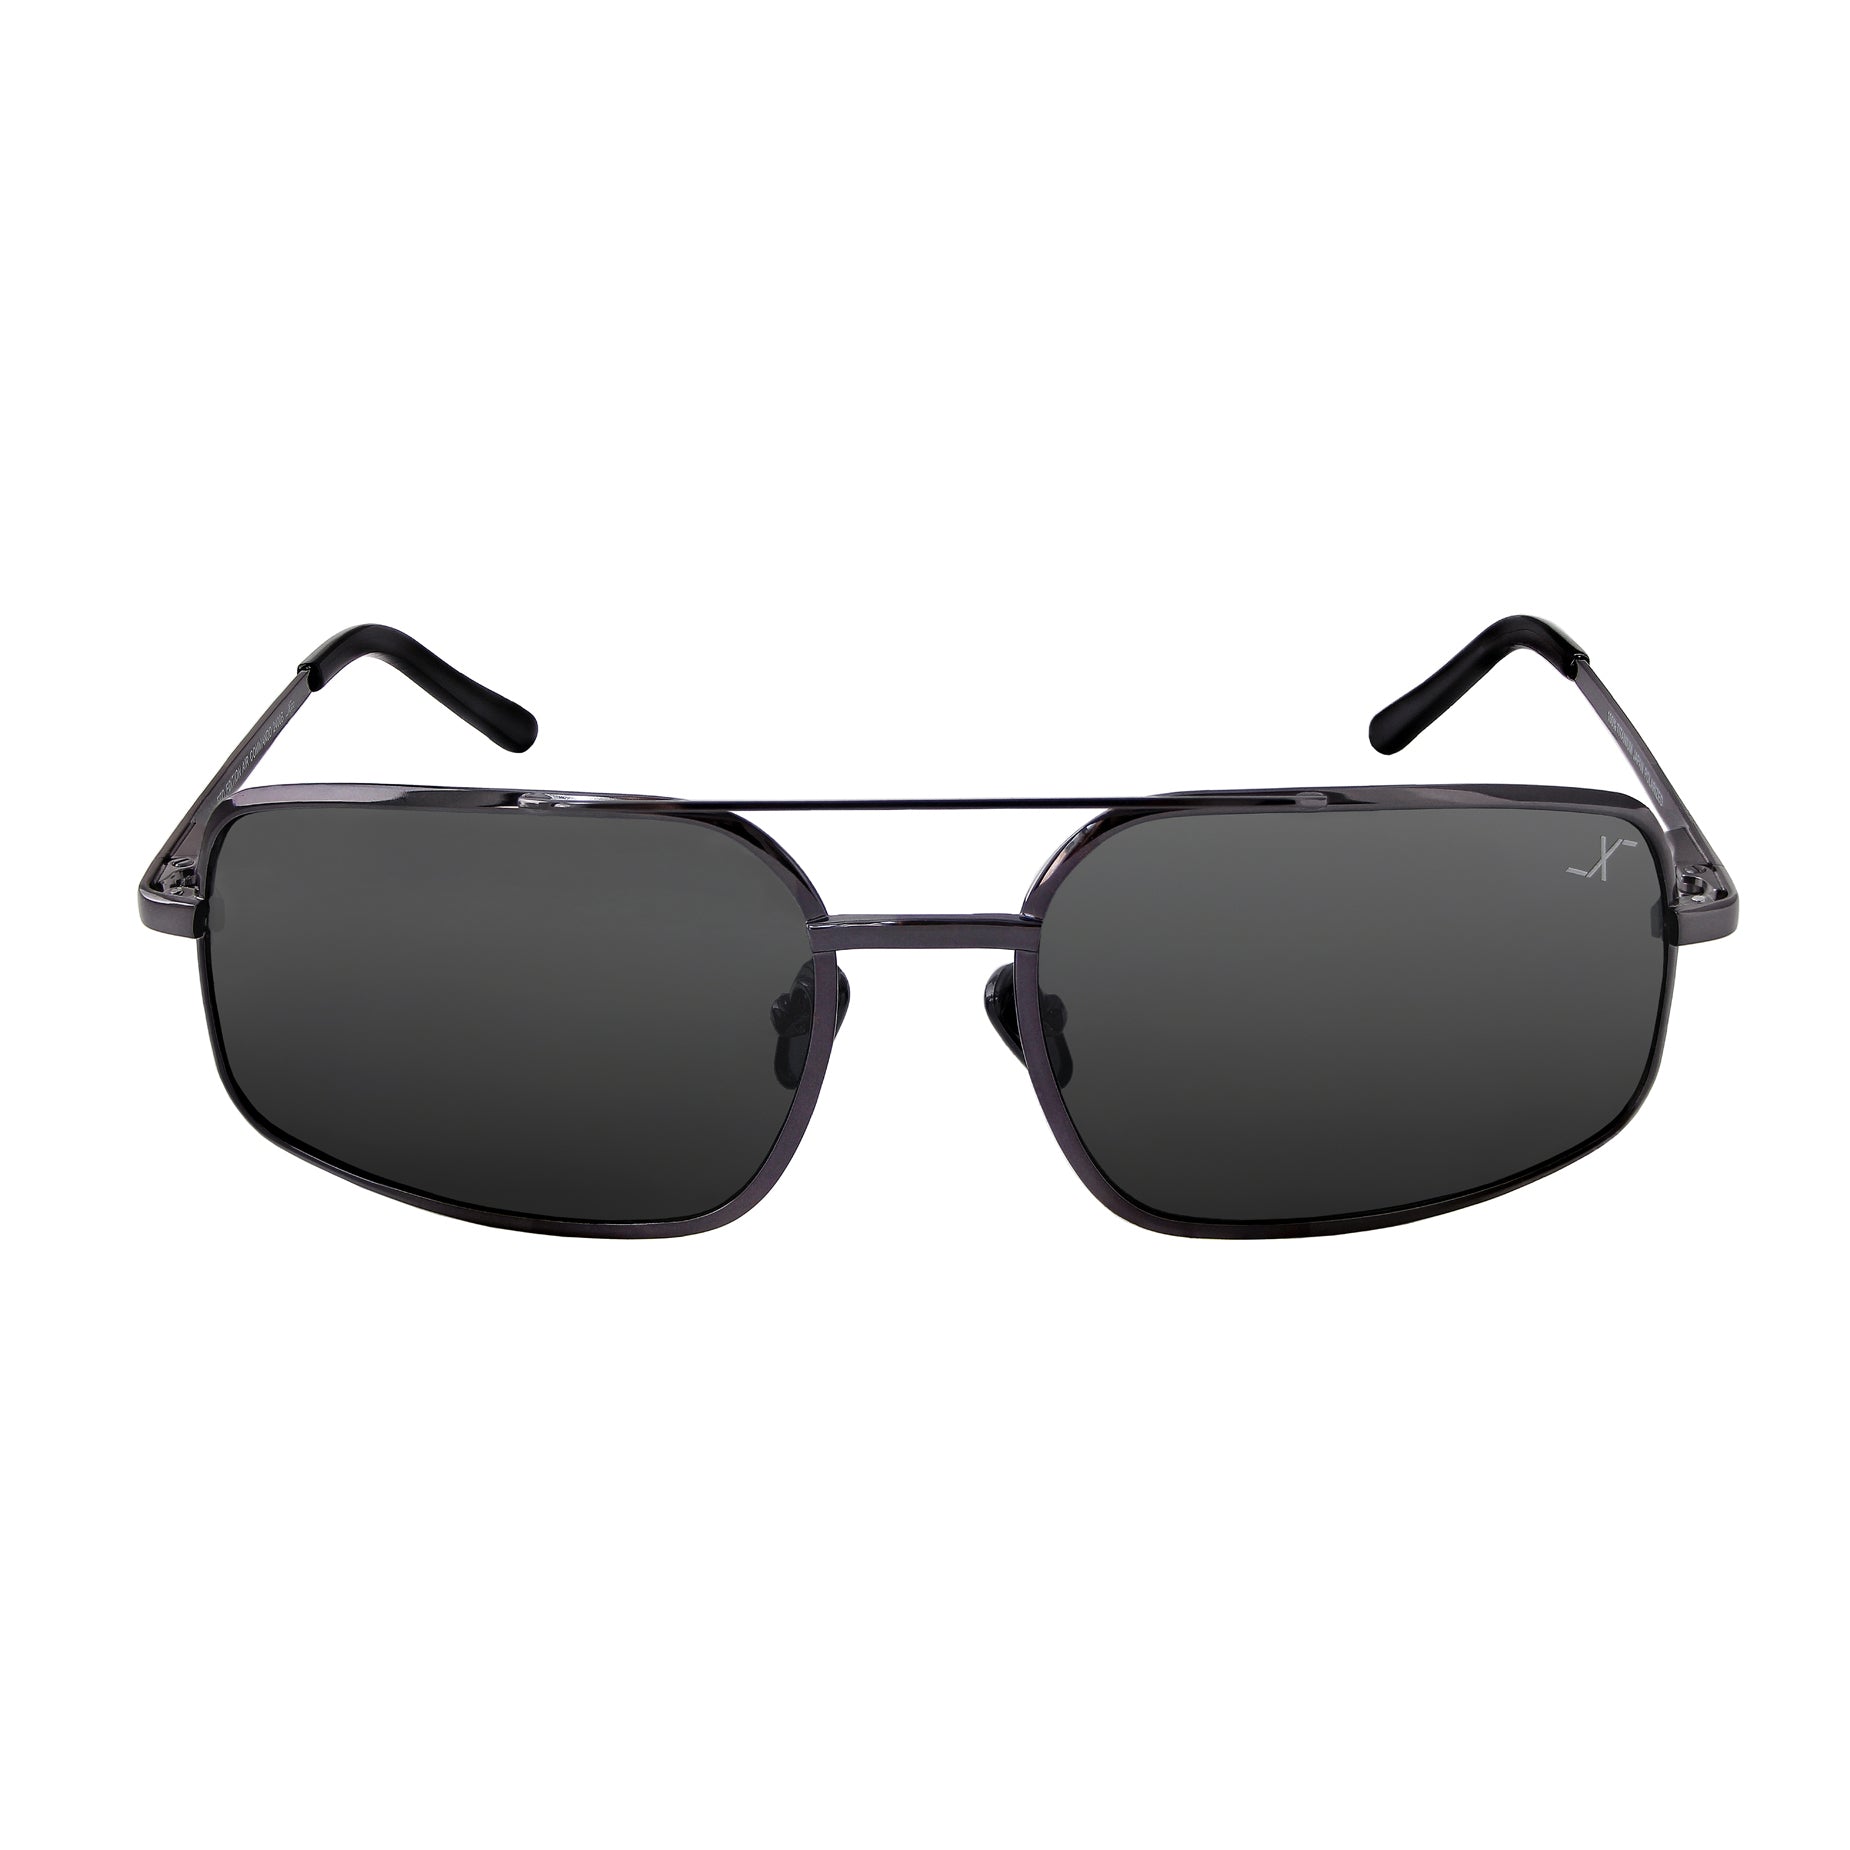 Louis Vuitton - Attitude Sunglasses in Netherlands